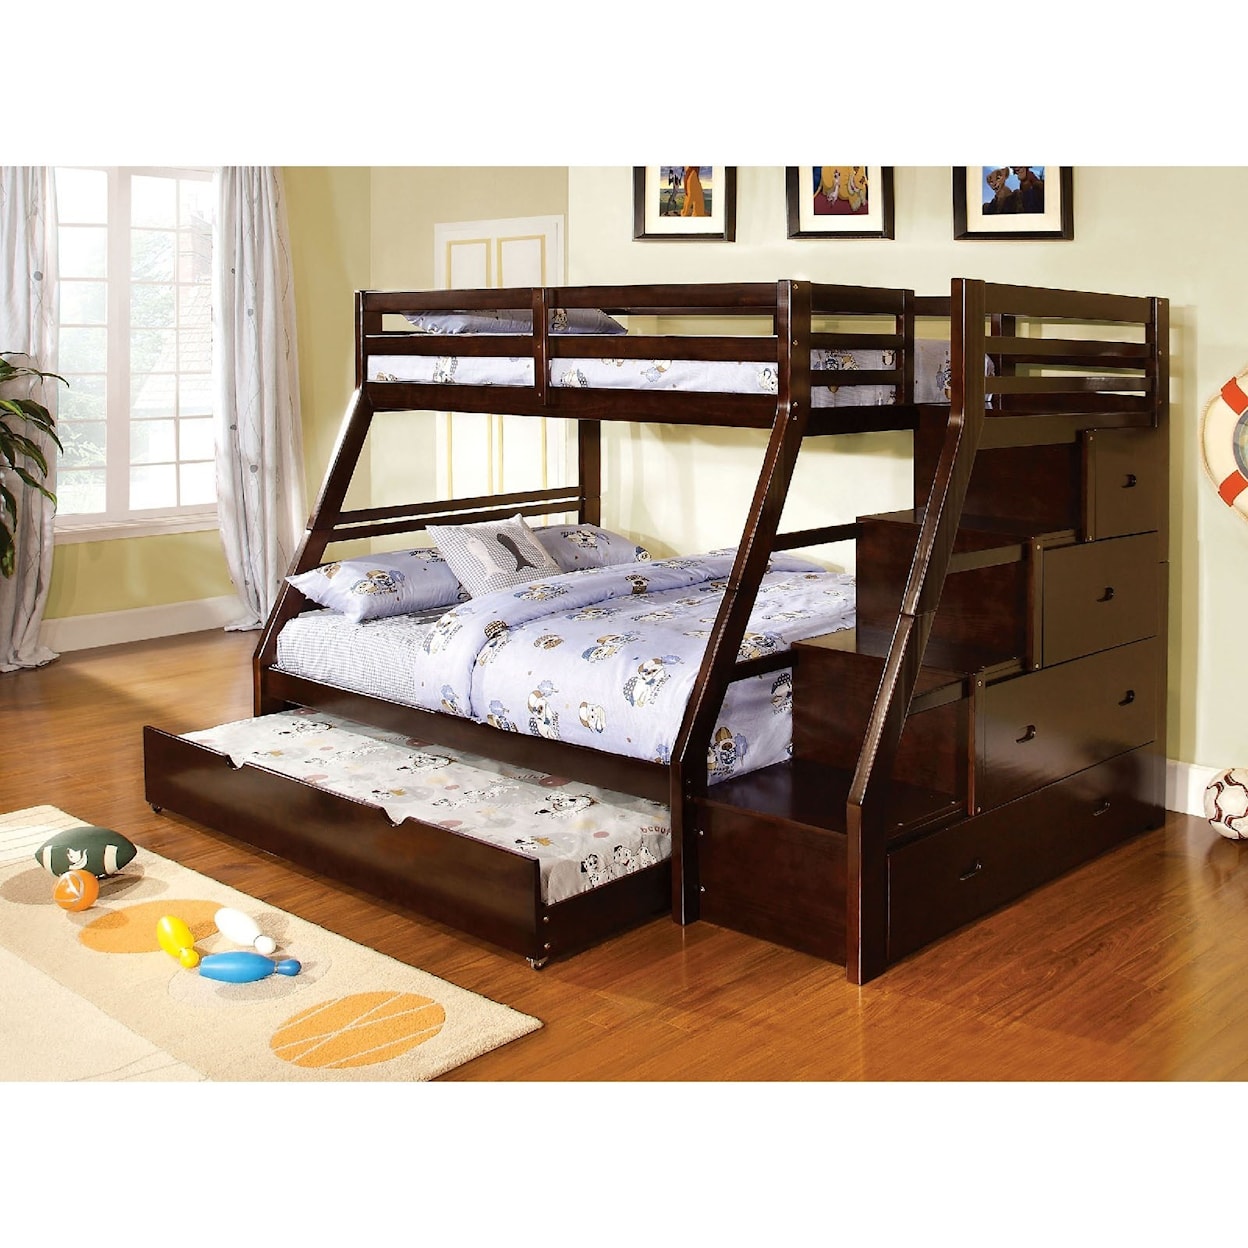 Furniture of America Ellington Twin/Full Bunk Bed